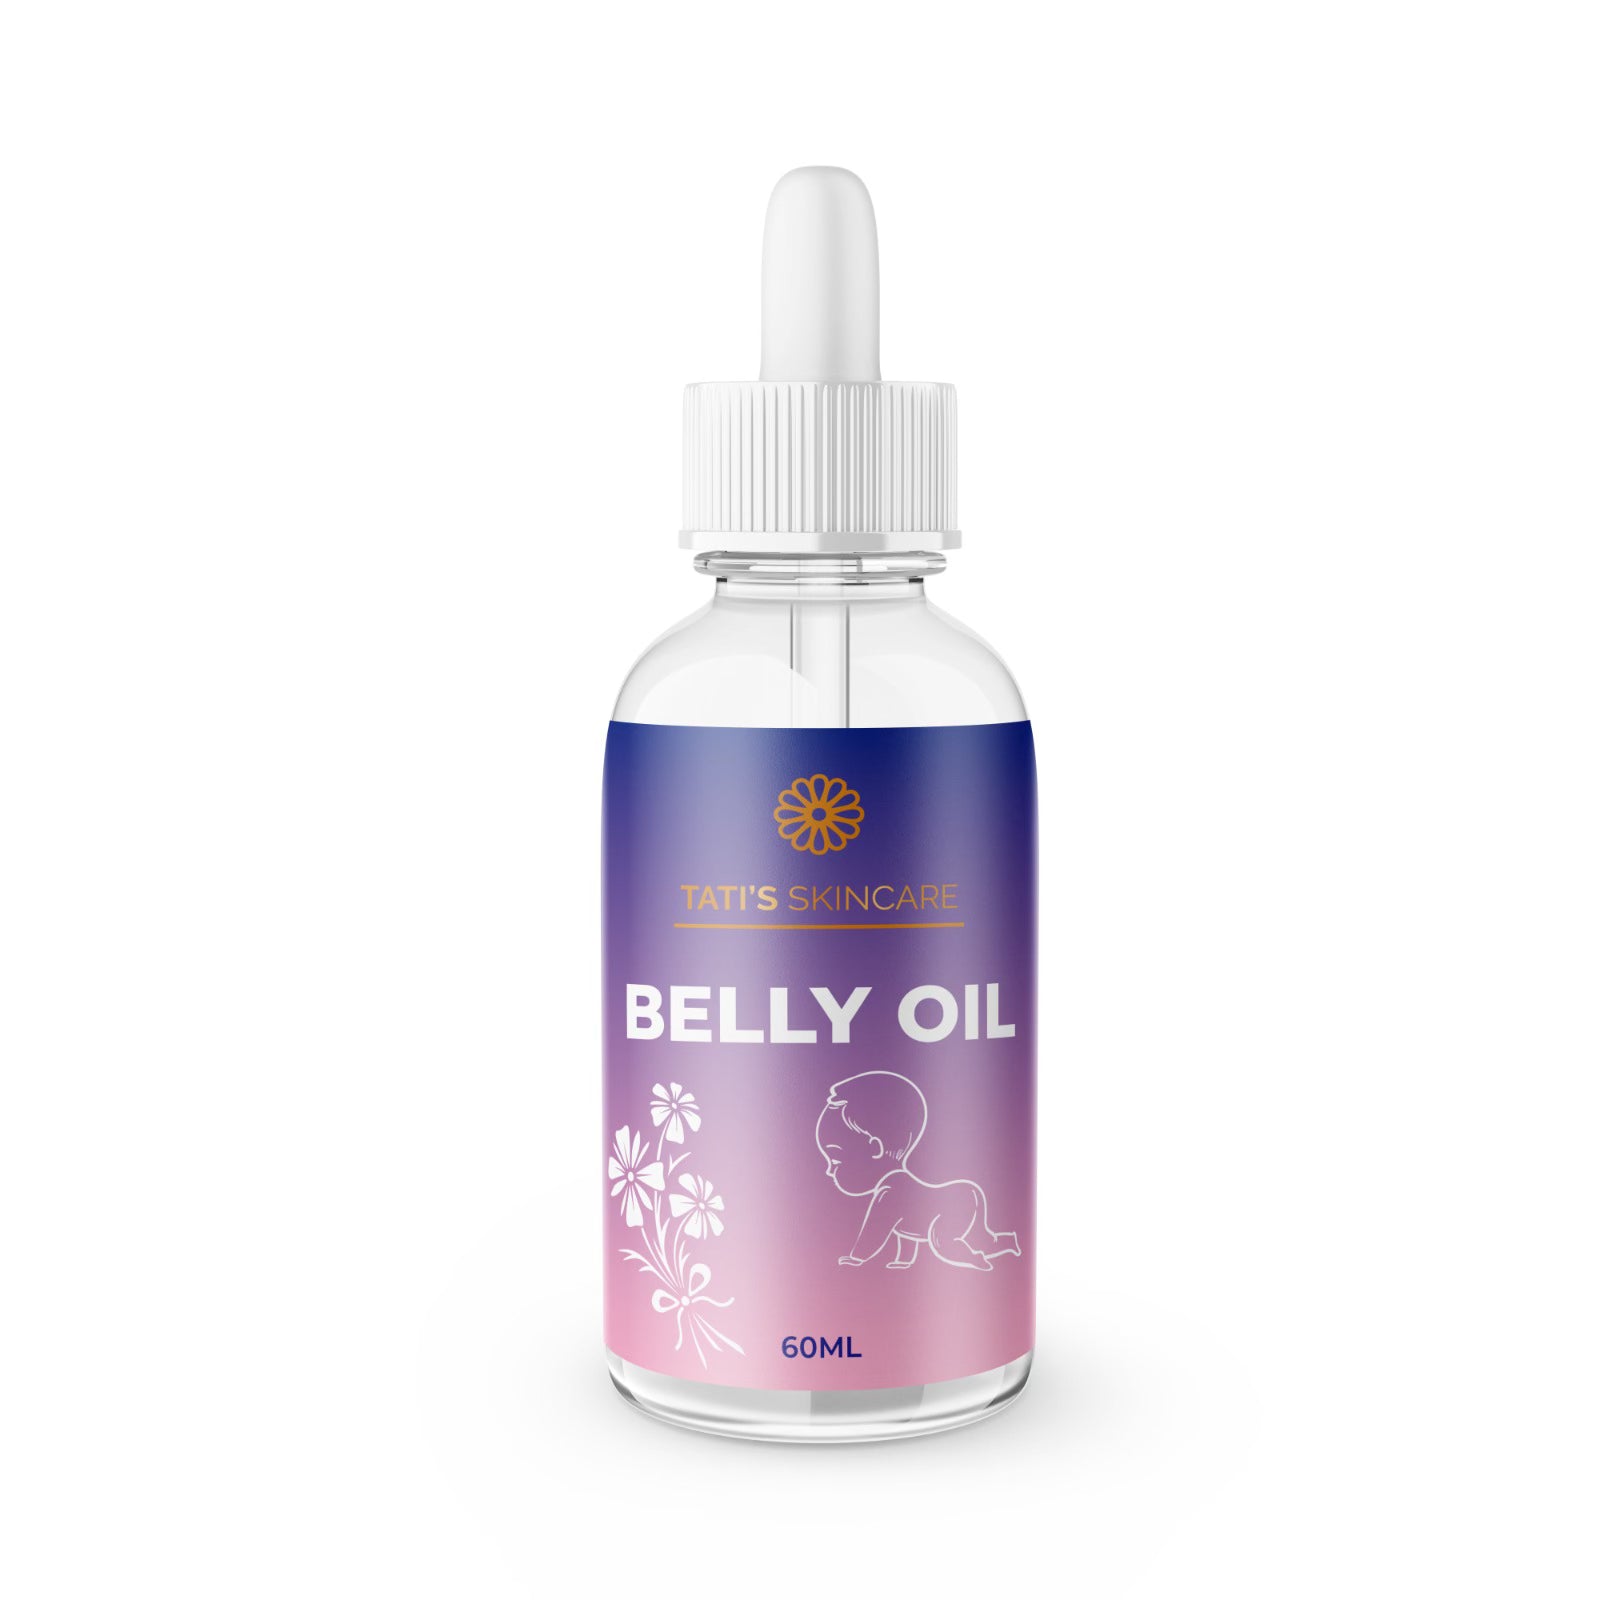 Belly Oil